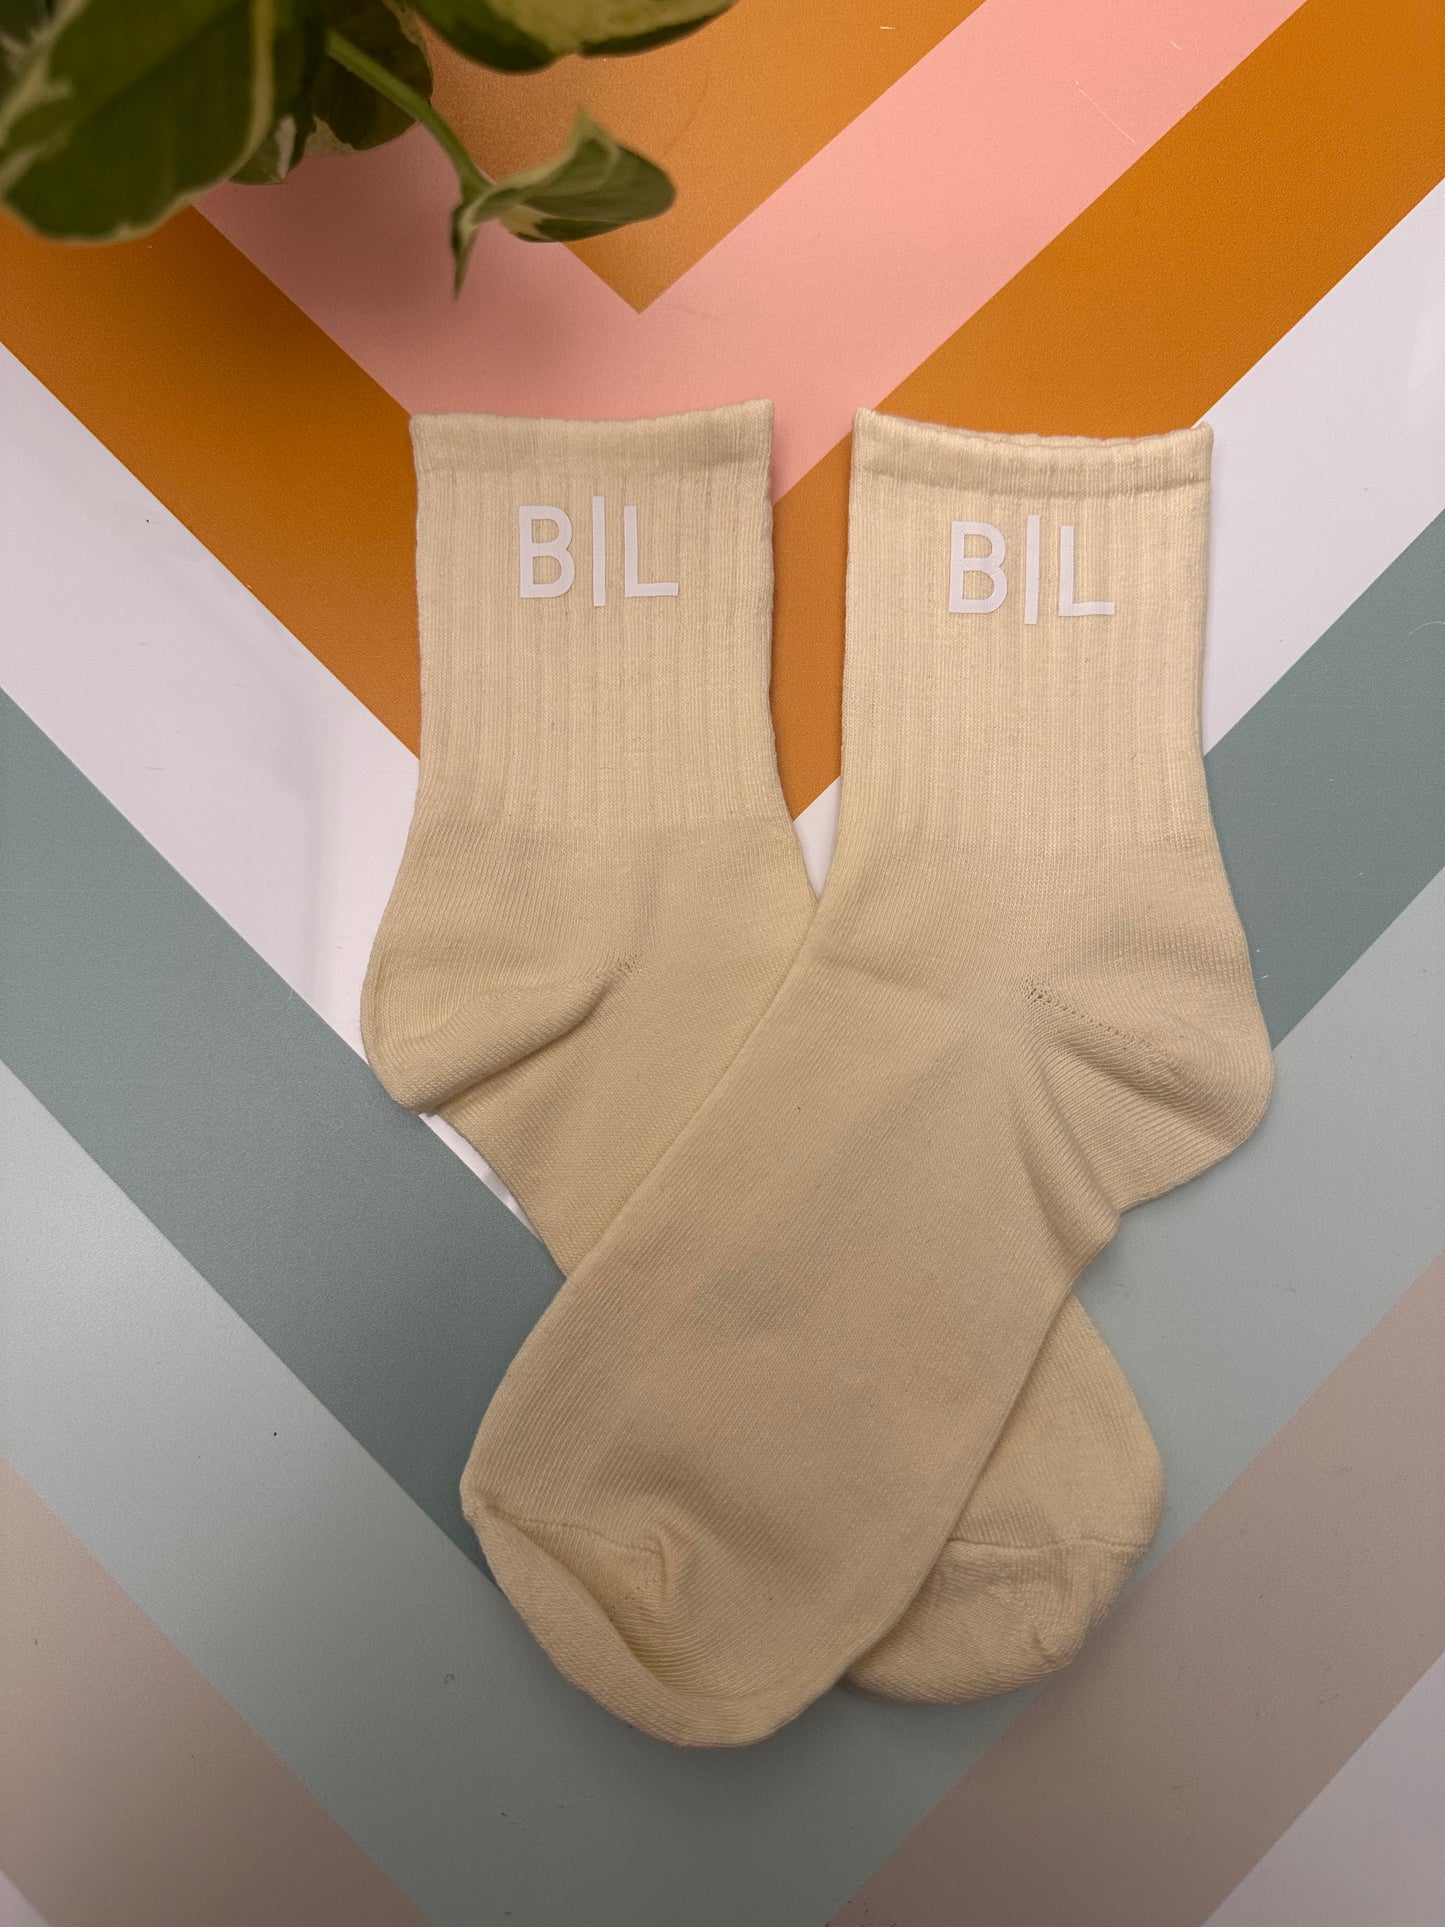 BL socks